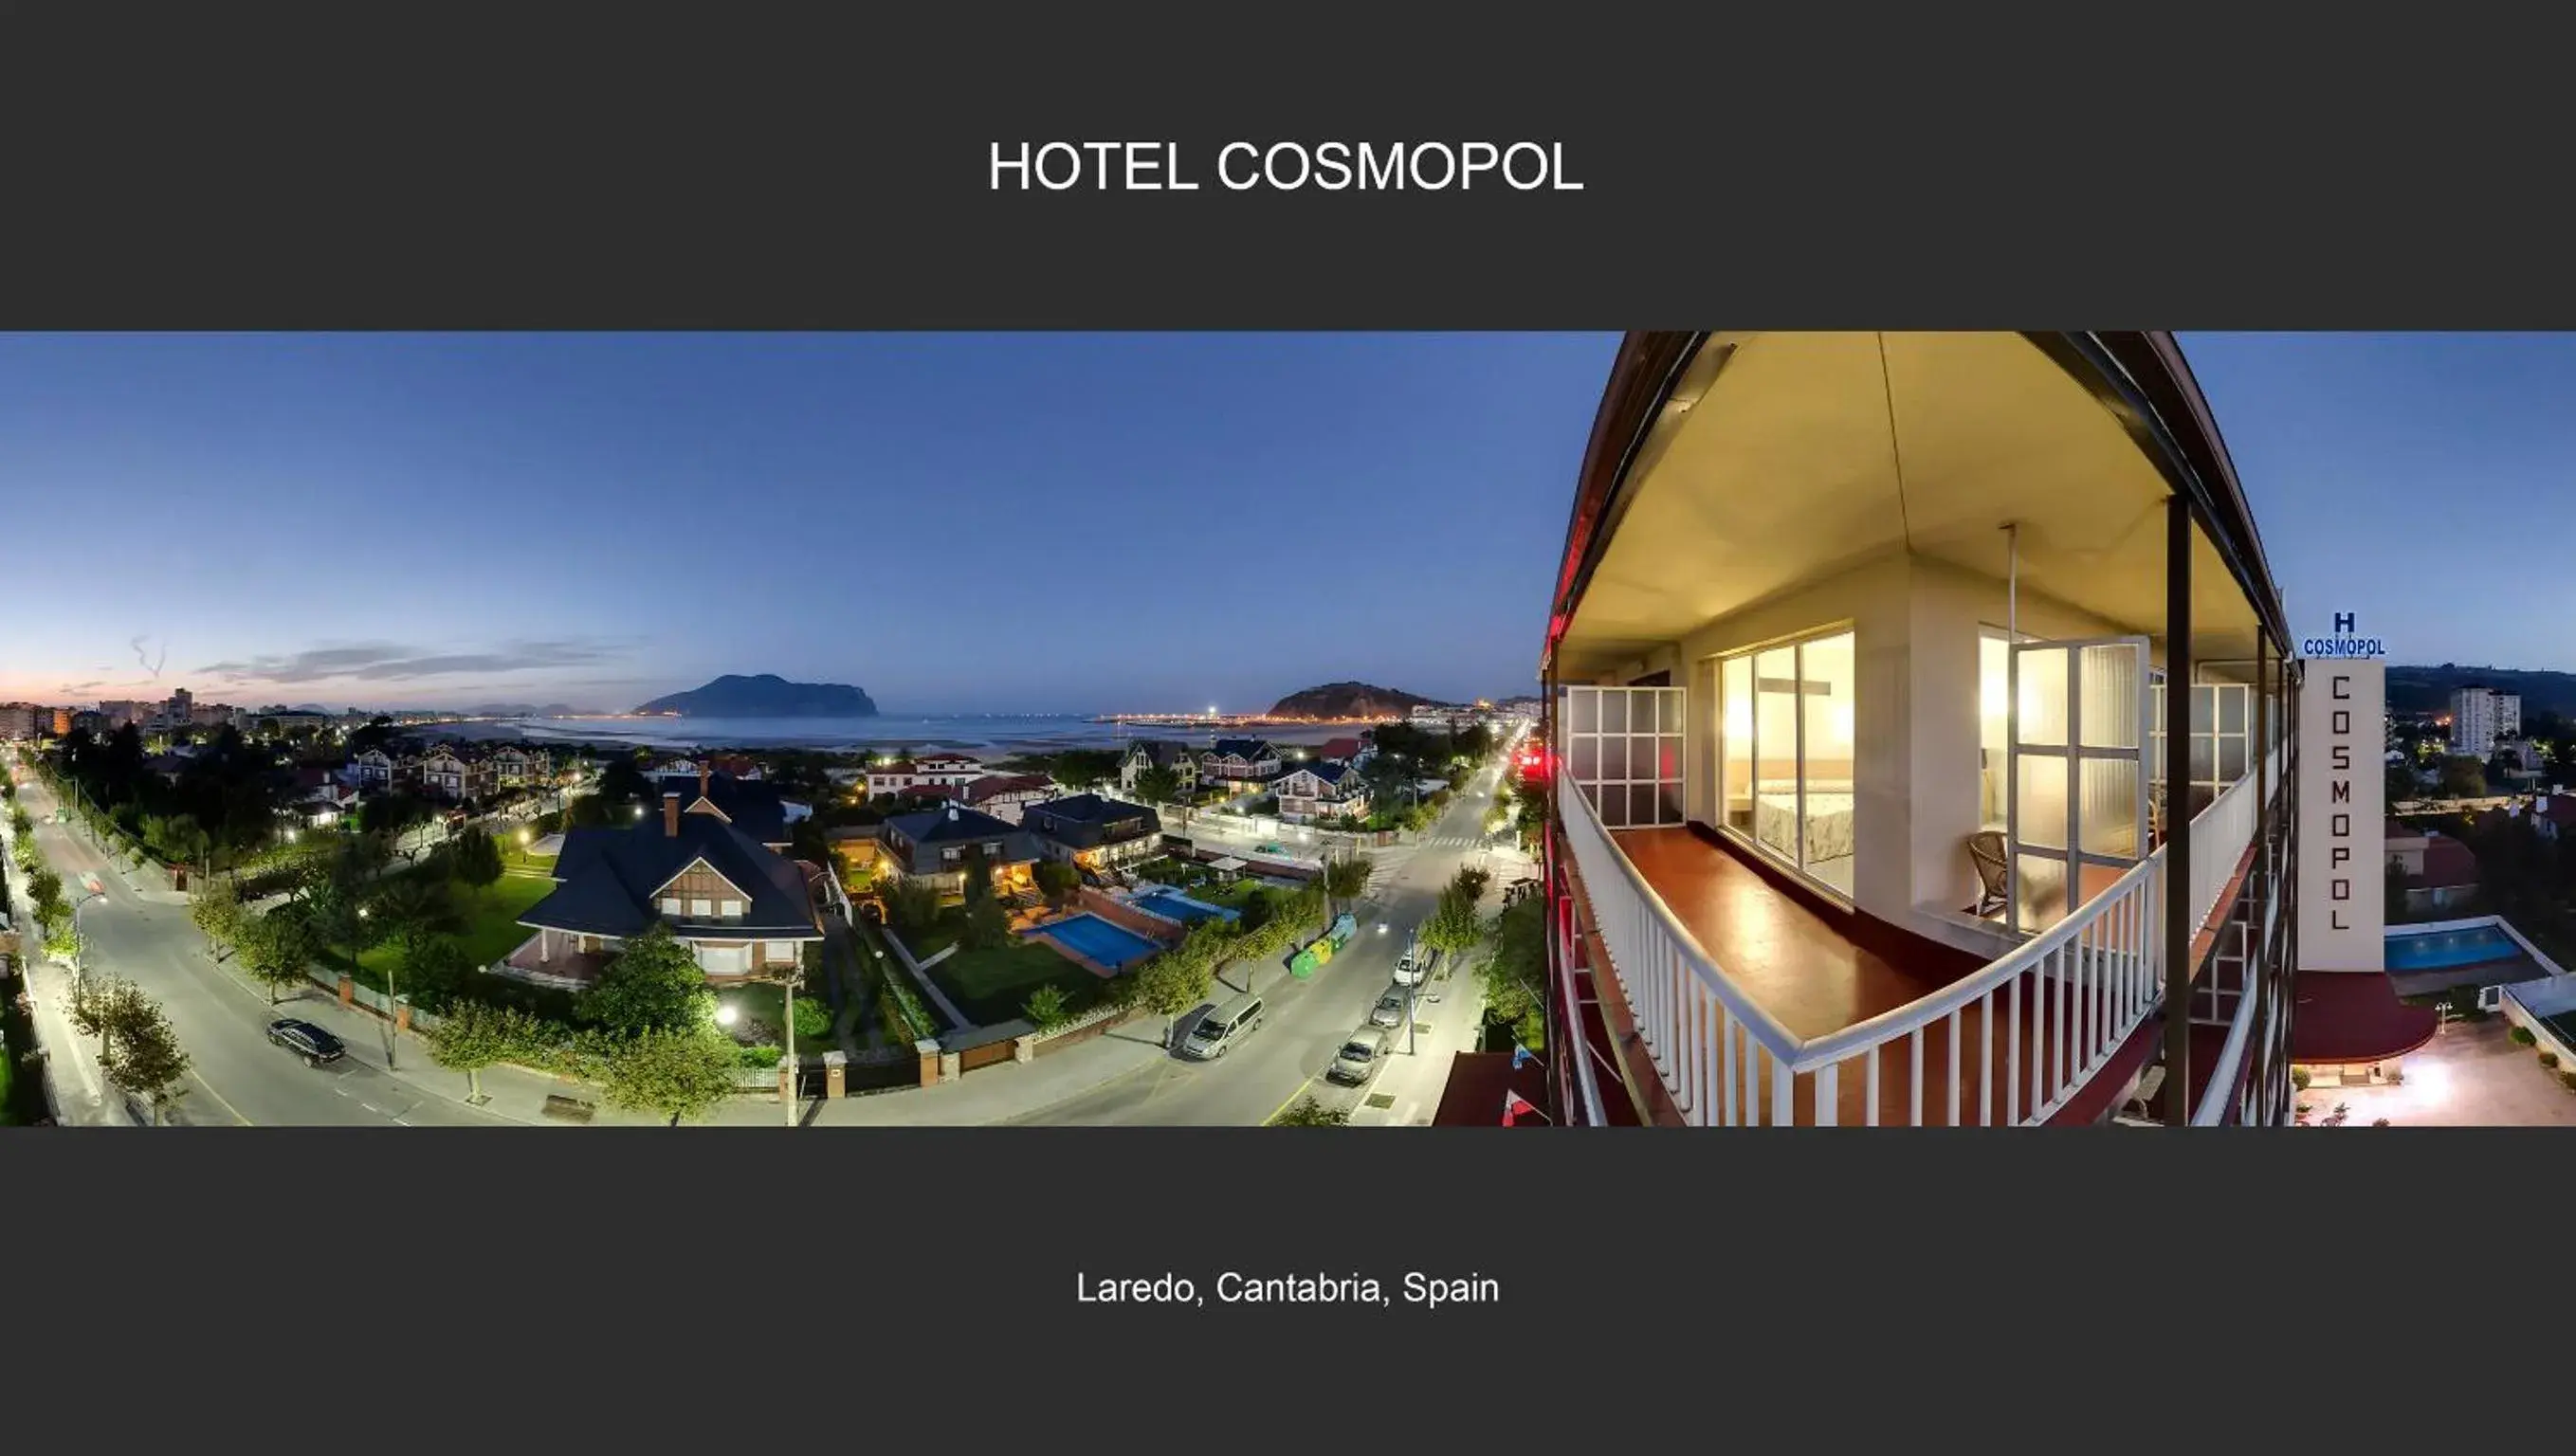 Property logo or sign in Hotel Cosmopol